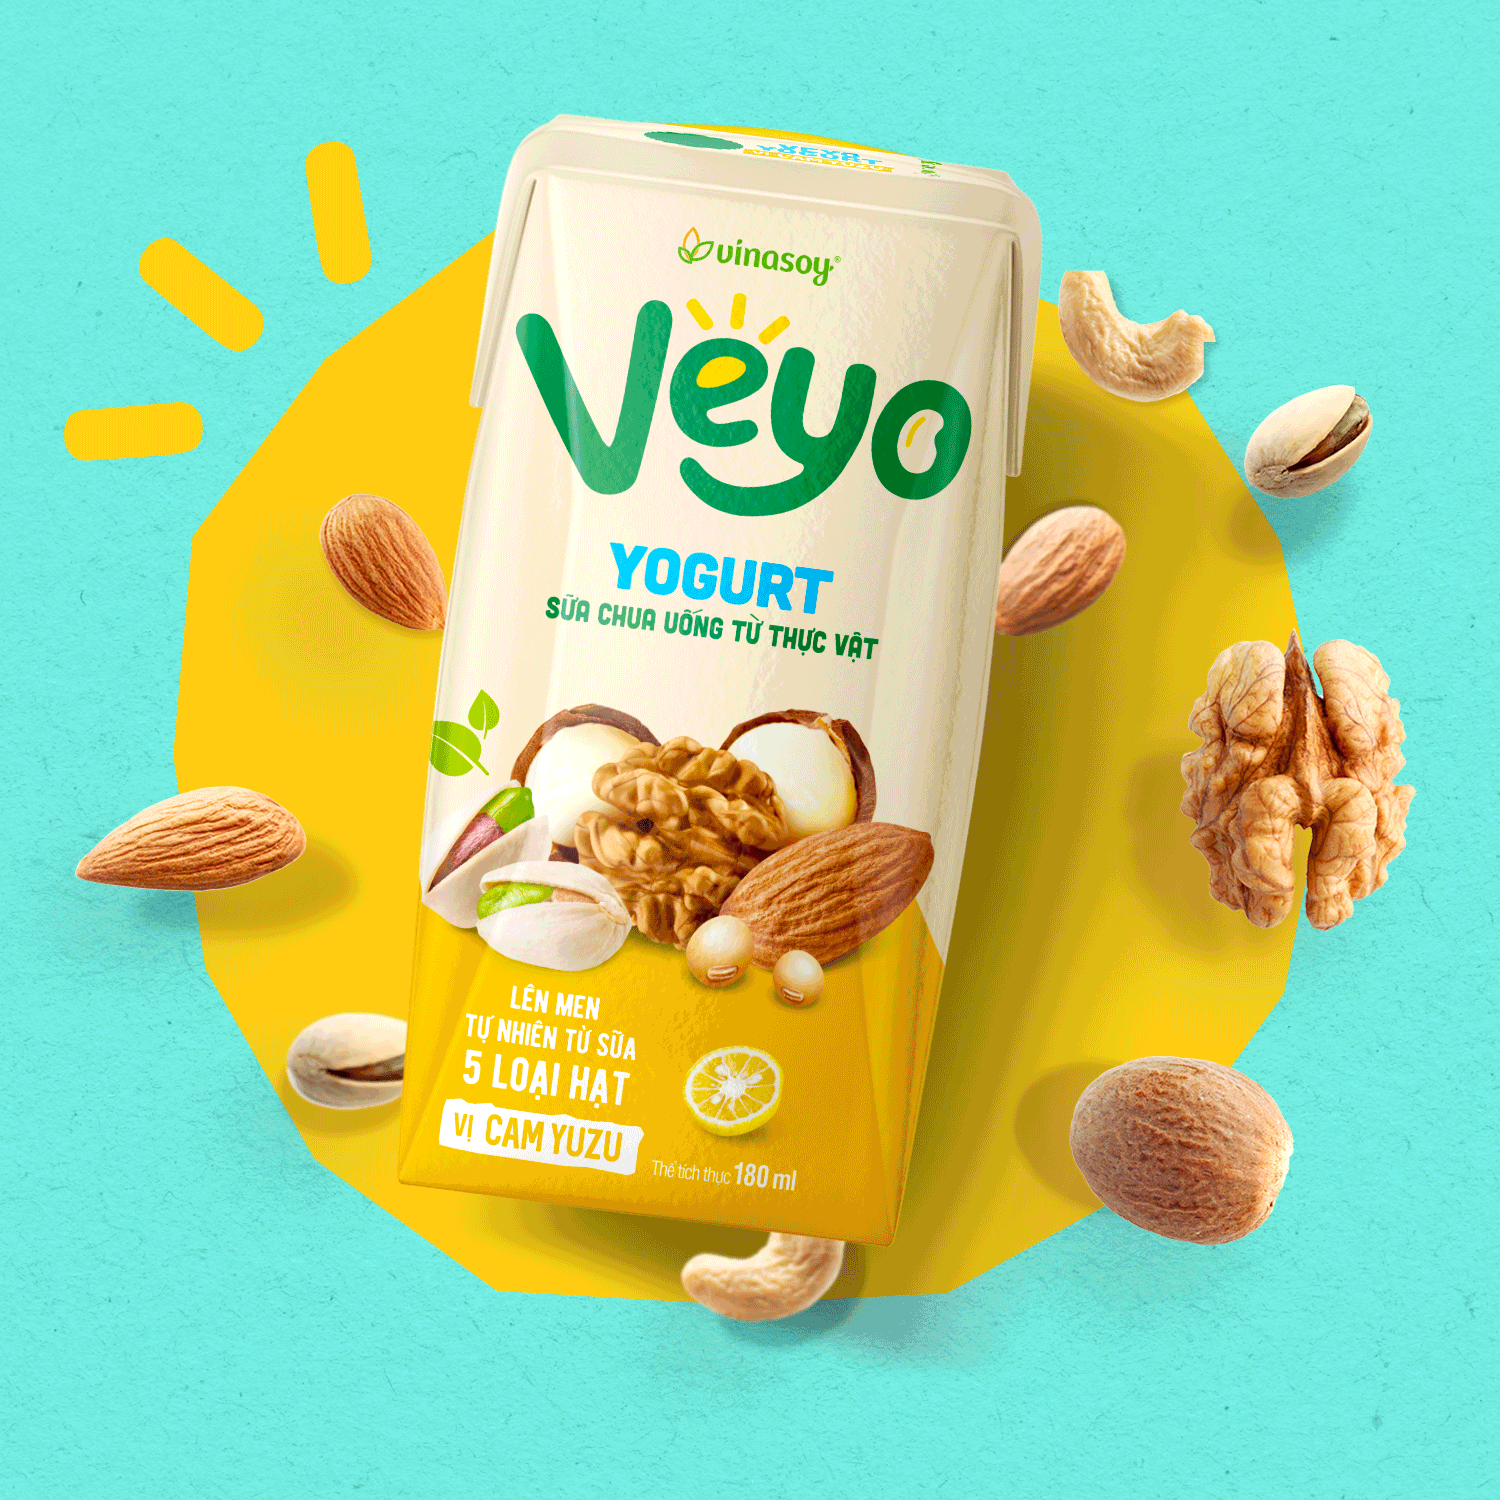 Veyo Vegan Drink Yogurt Packaging and Brand Development